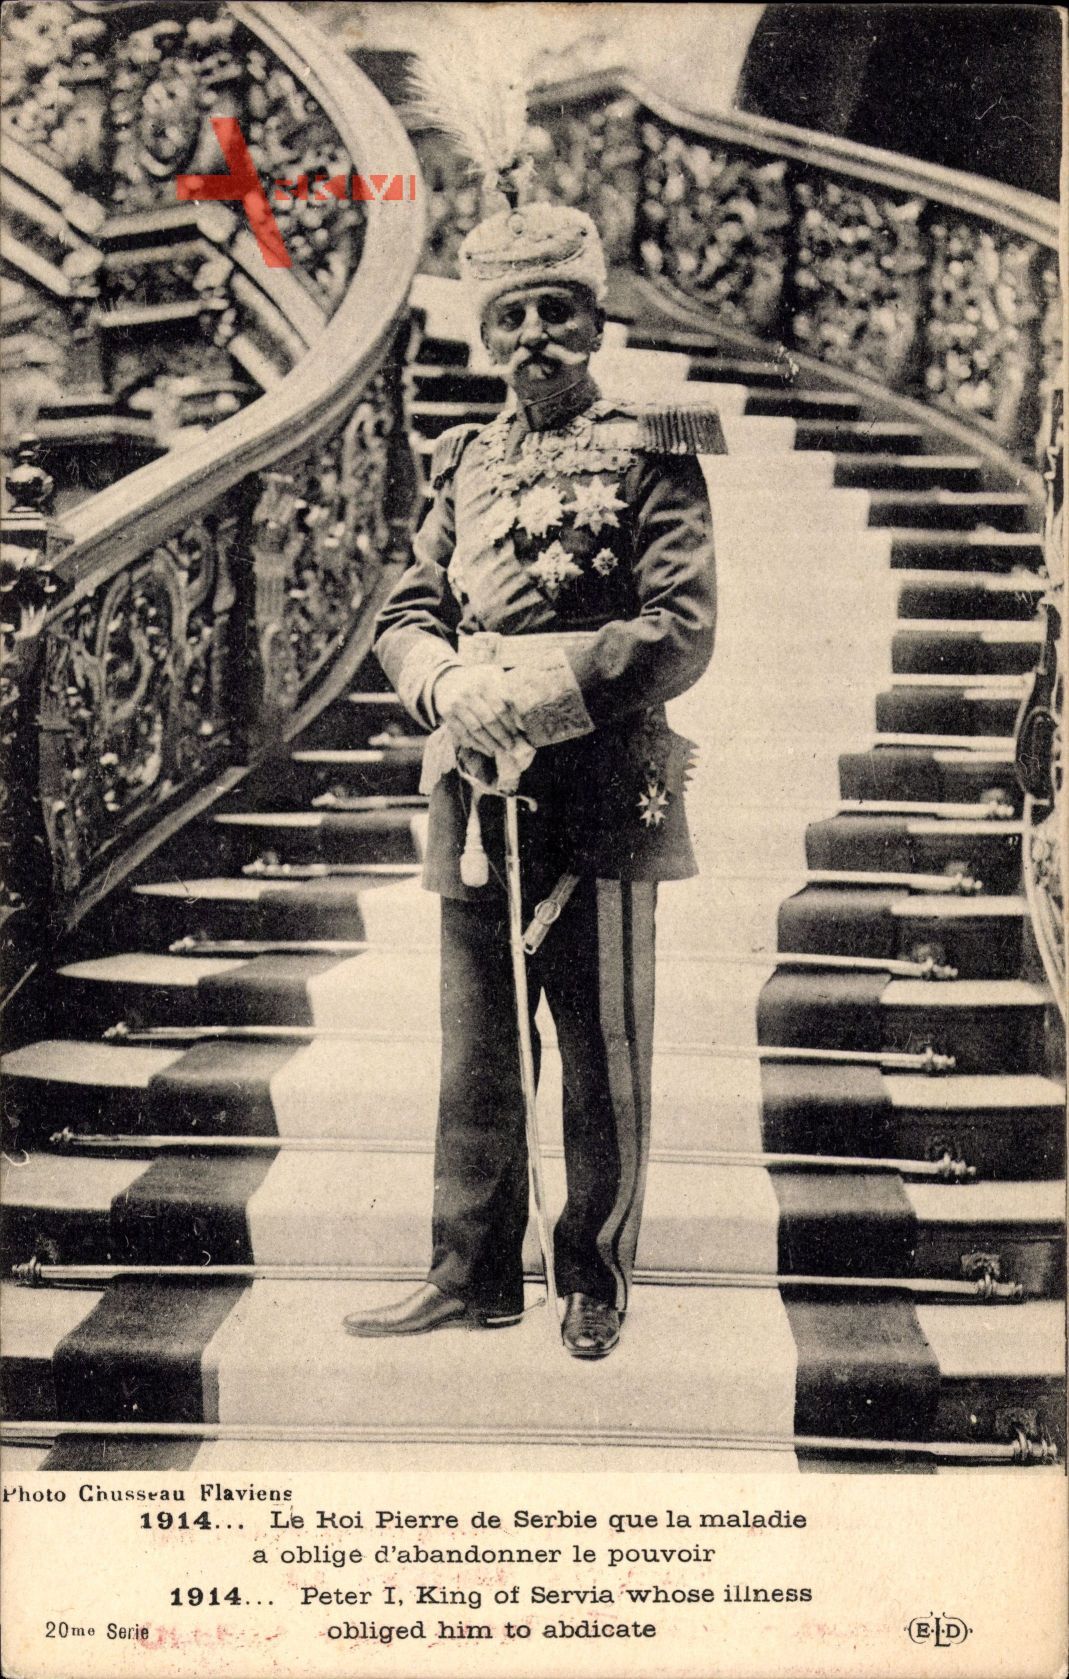 König Peter I. Karadjordjevic von Jugoslawien, Roi Pierre de Serbie, Uniform